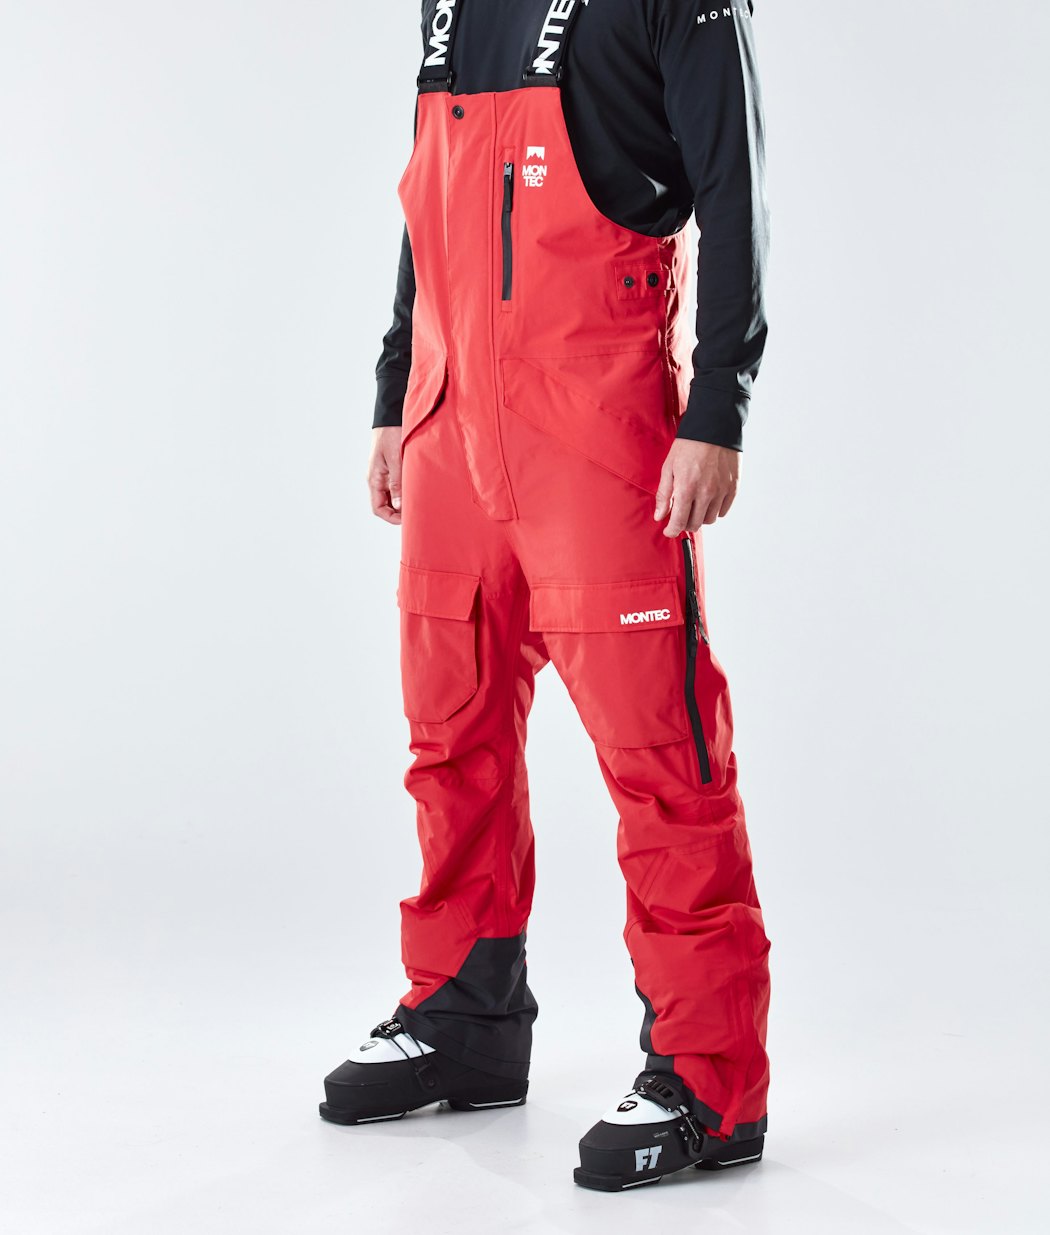 Fawk 2020 Ski Pants Men Red